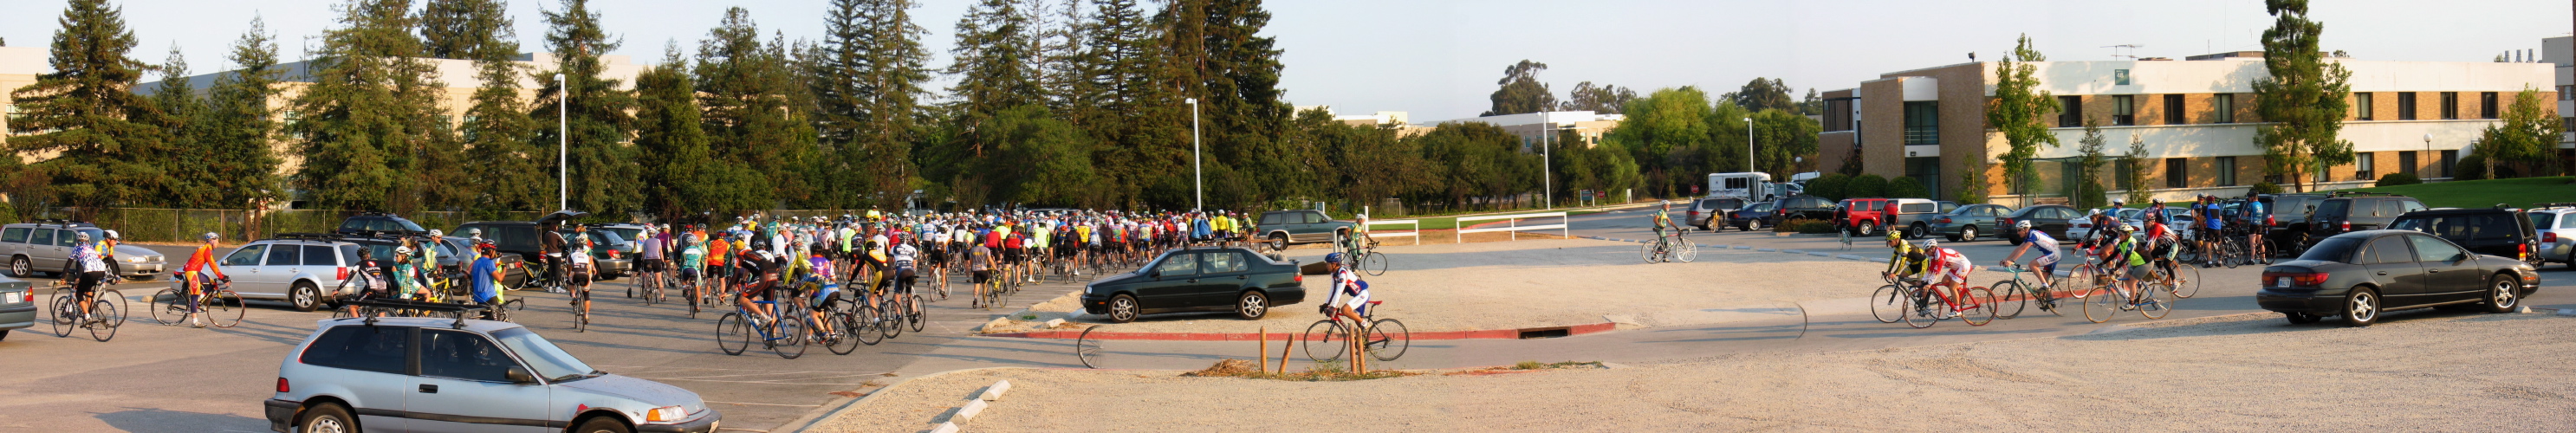 Cyclists arriving at the VA.